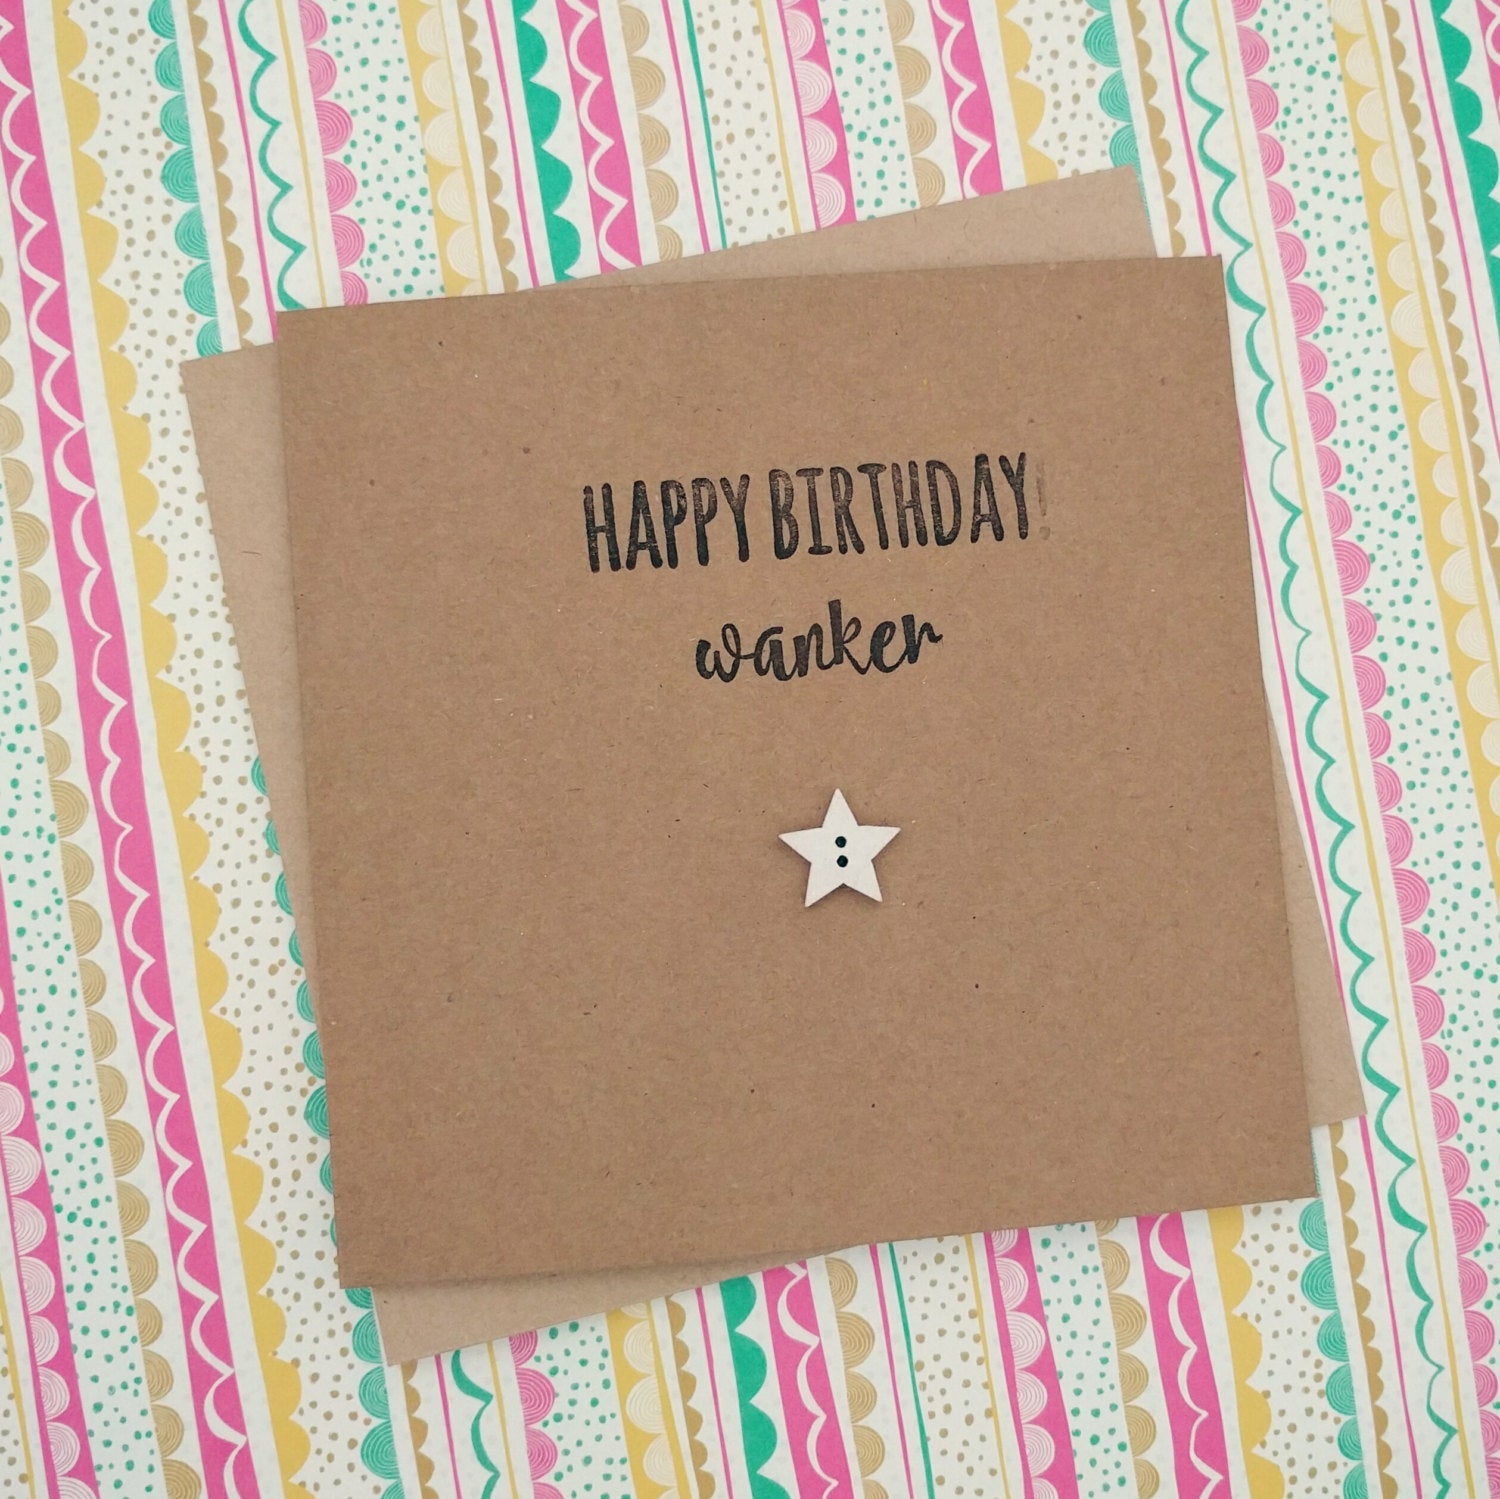 Handmade funny rude "Happy Birthday wanker" card